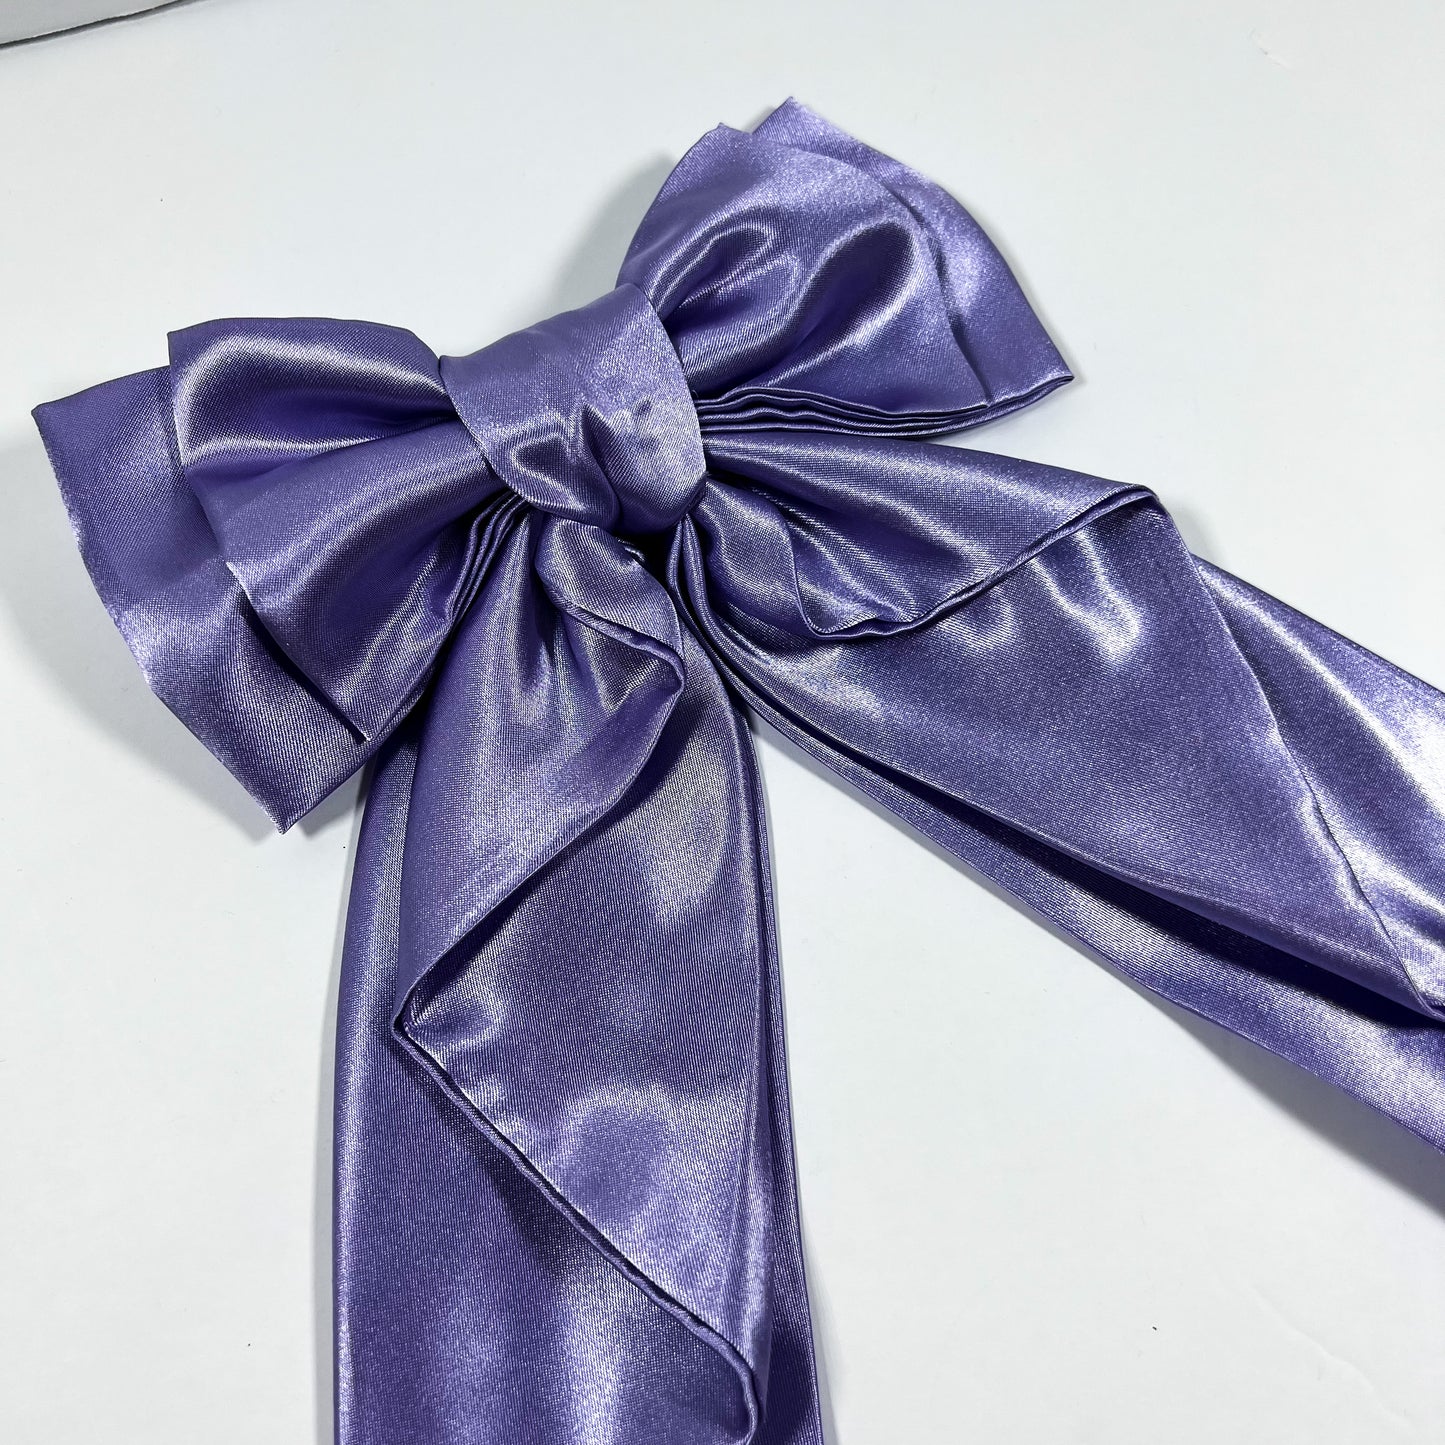 Lavender Enchanting Bow